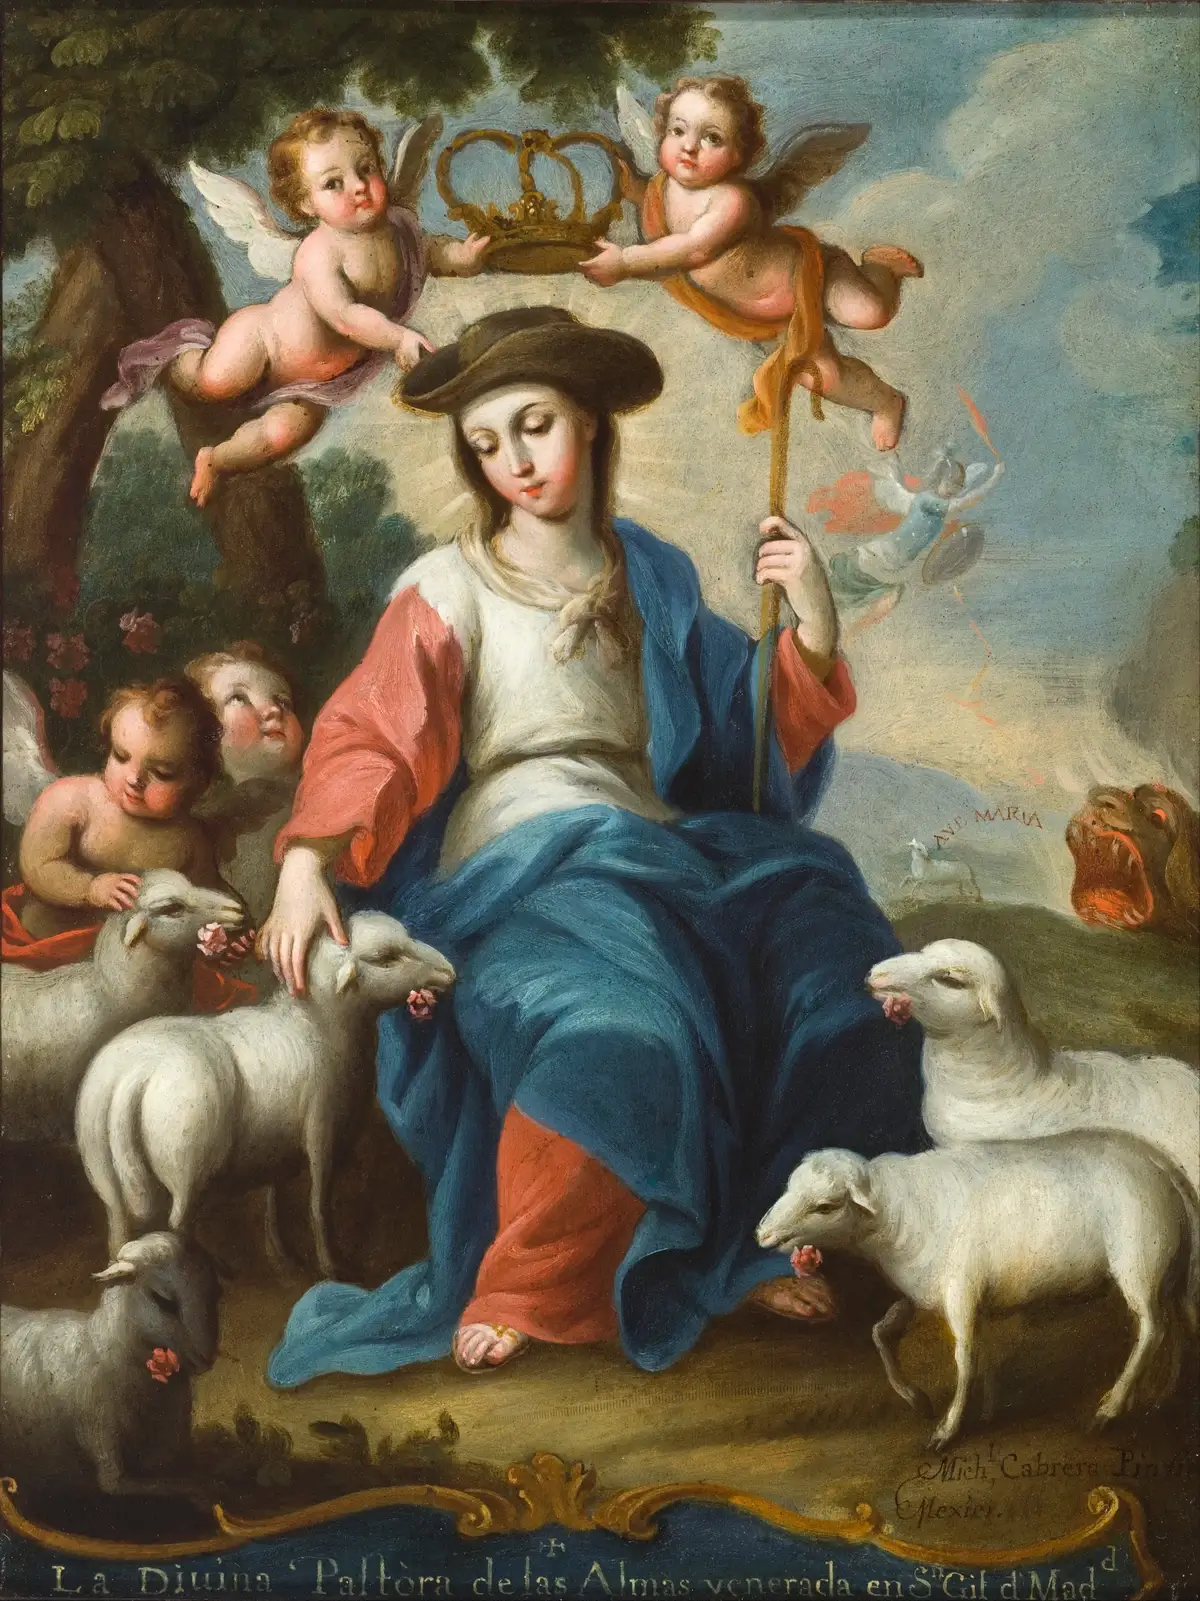 Miguel Cabrera, "The Divine Shepherdess", 1760